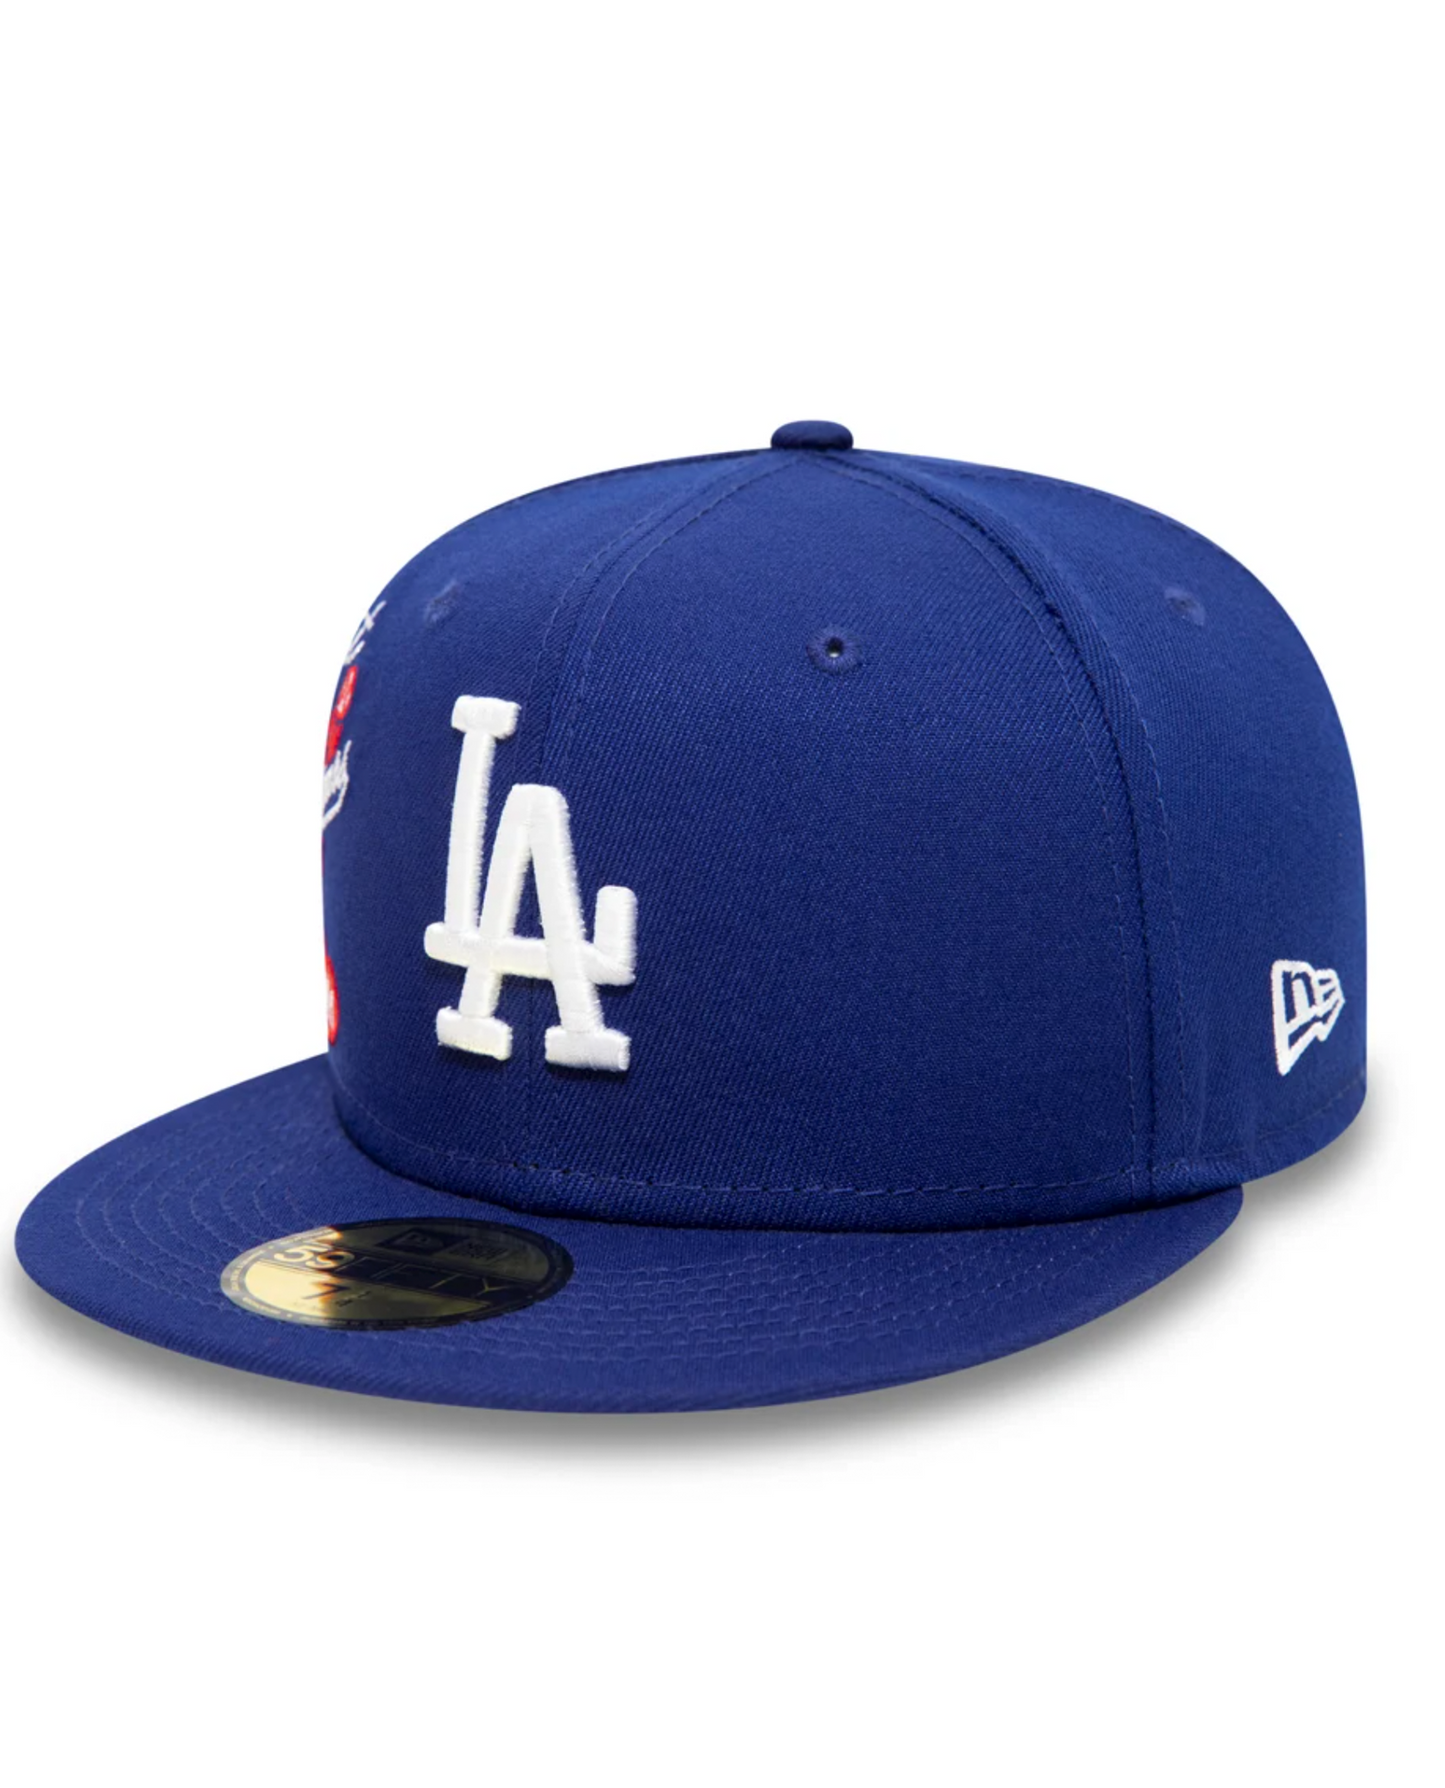 NEWERA NEW ERA 59FIFTY 5950 Fitted CAP *MLB * LA Dodgers